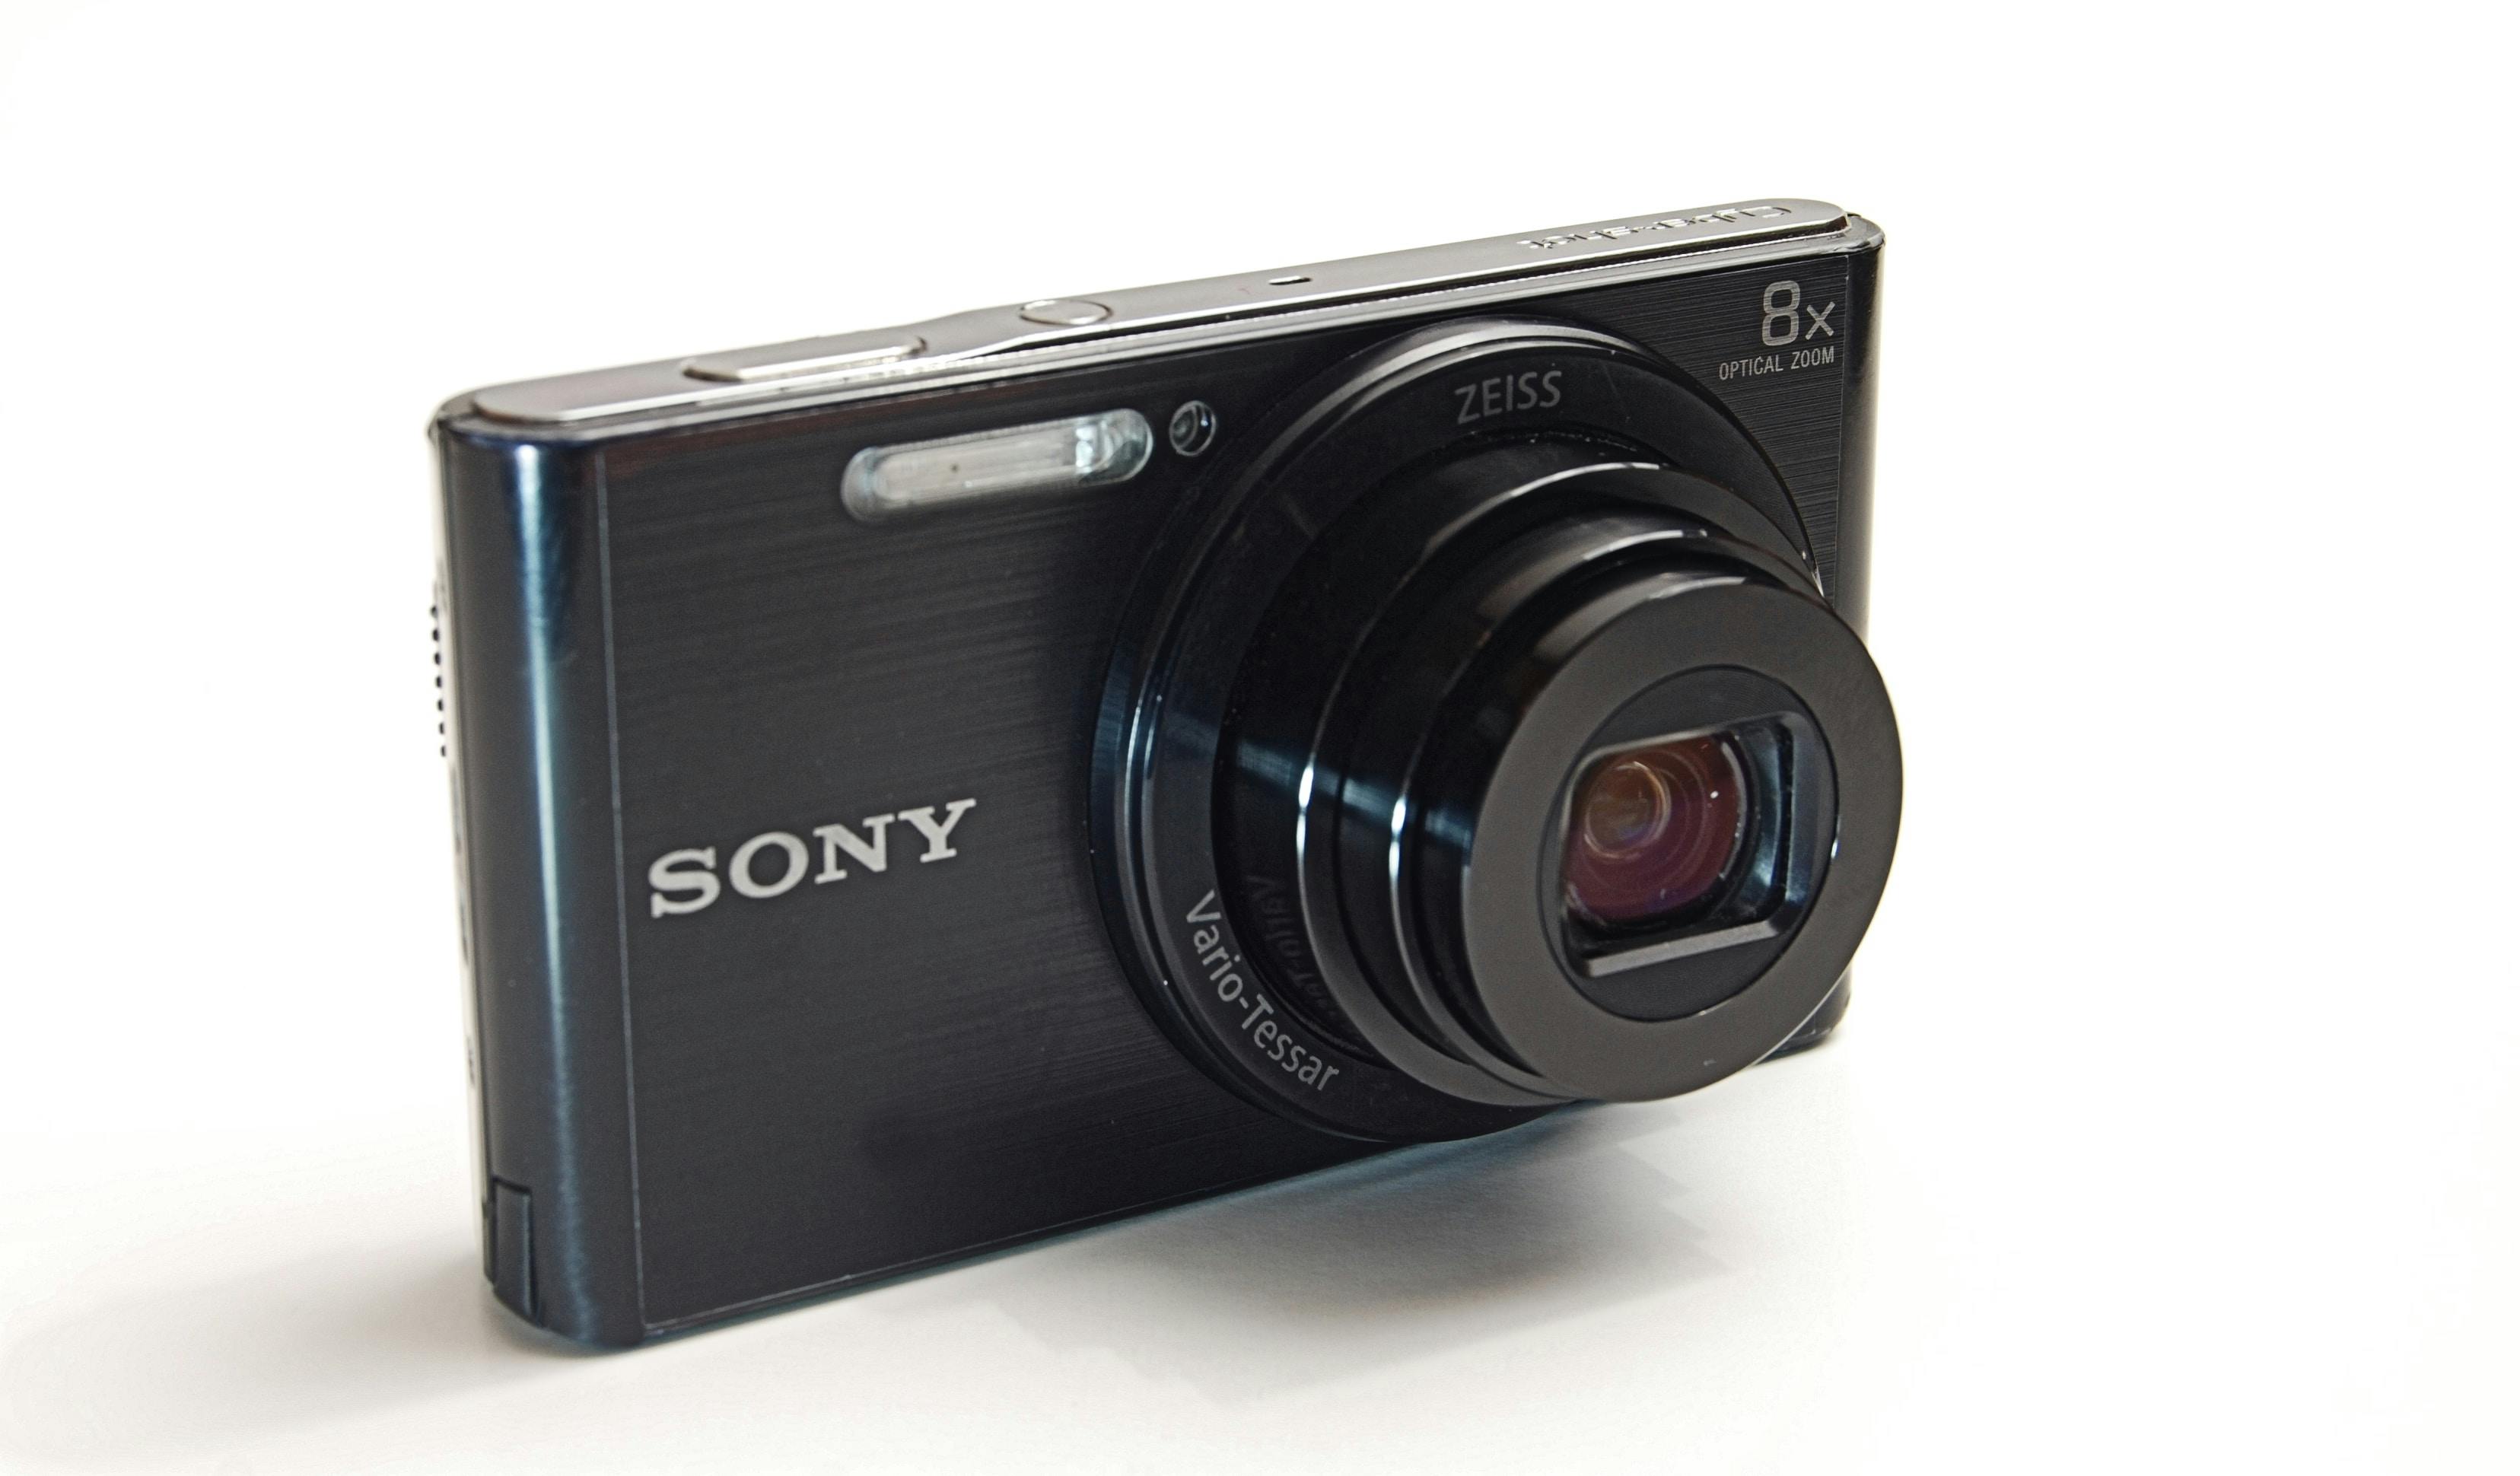 en kompaktkamera i ett vitt område - typer av kameror | digital